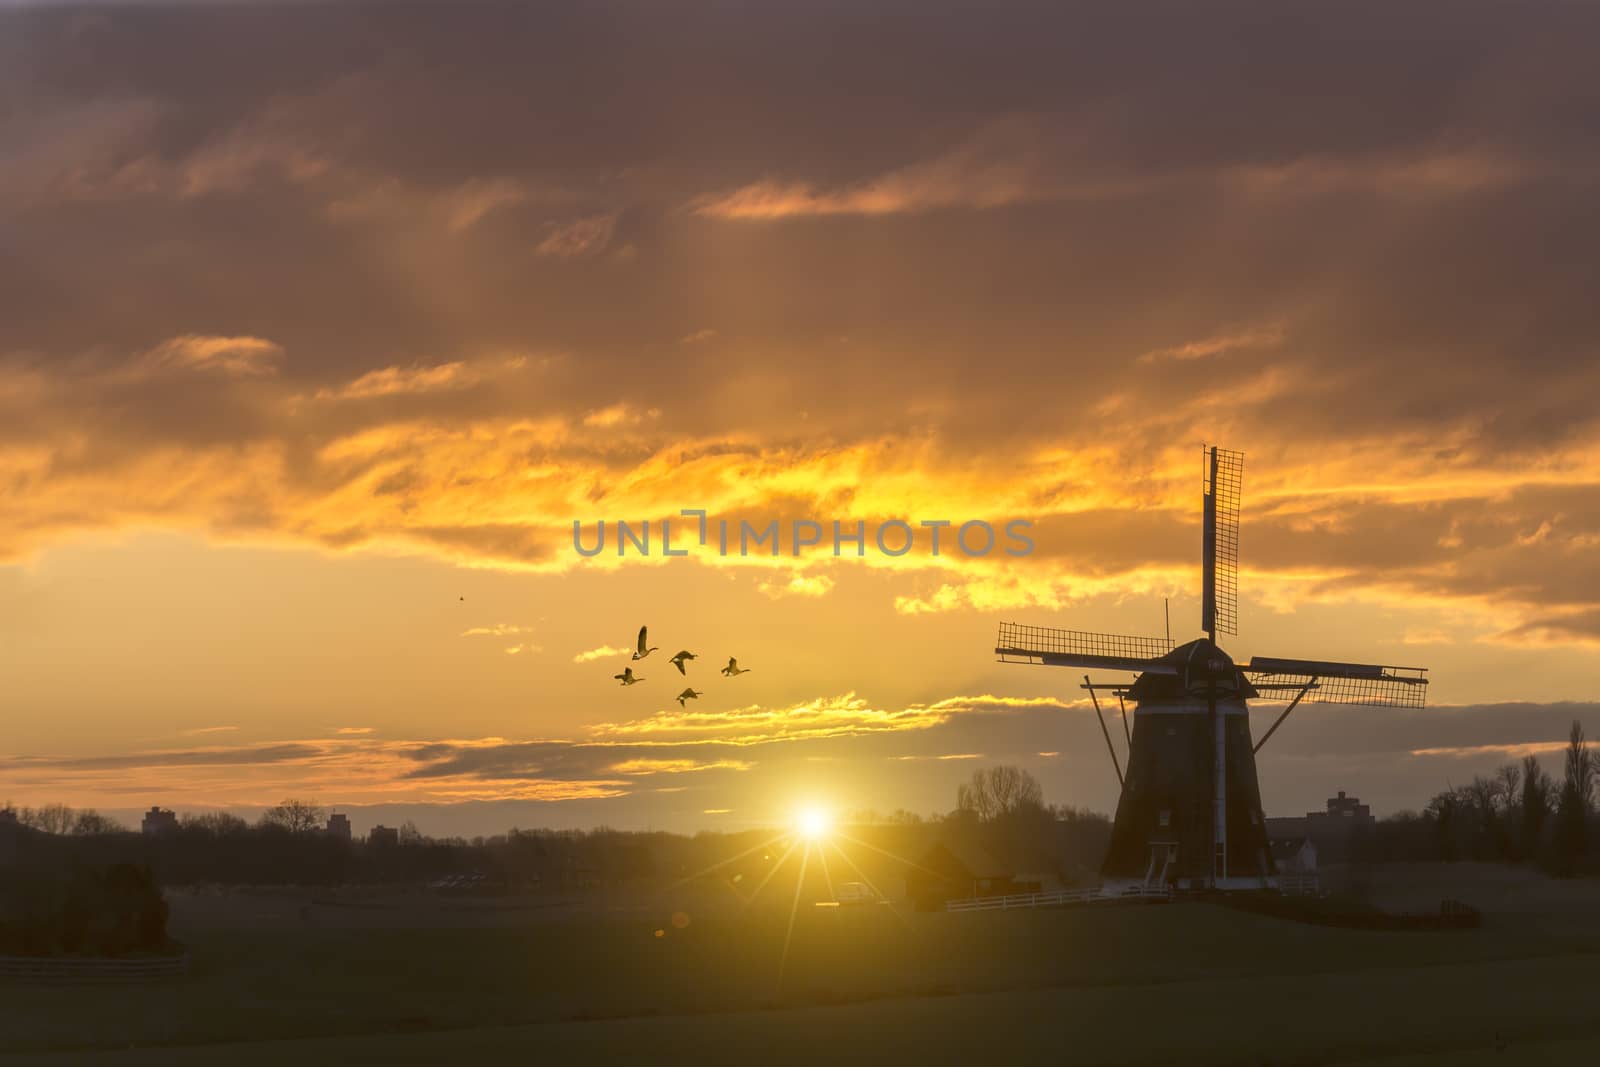 Warm and vibrant sunrise over the Unesco world heritage windmill in Leidschendam, Kinderdijk, Netherlands  by ankorlight